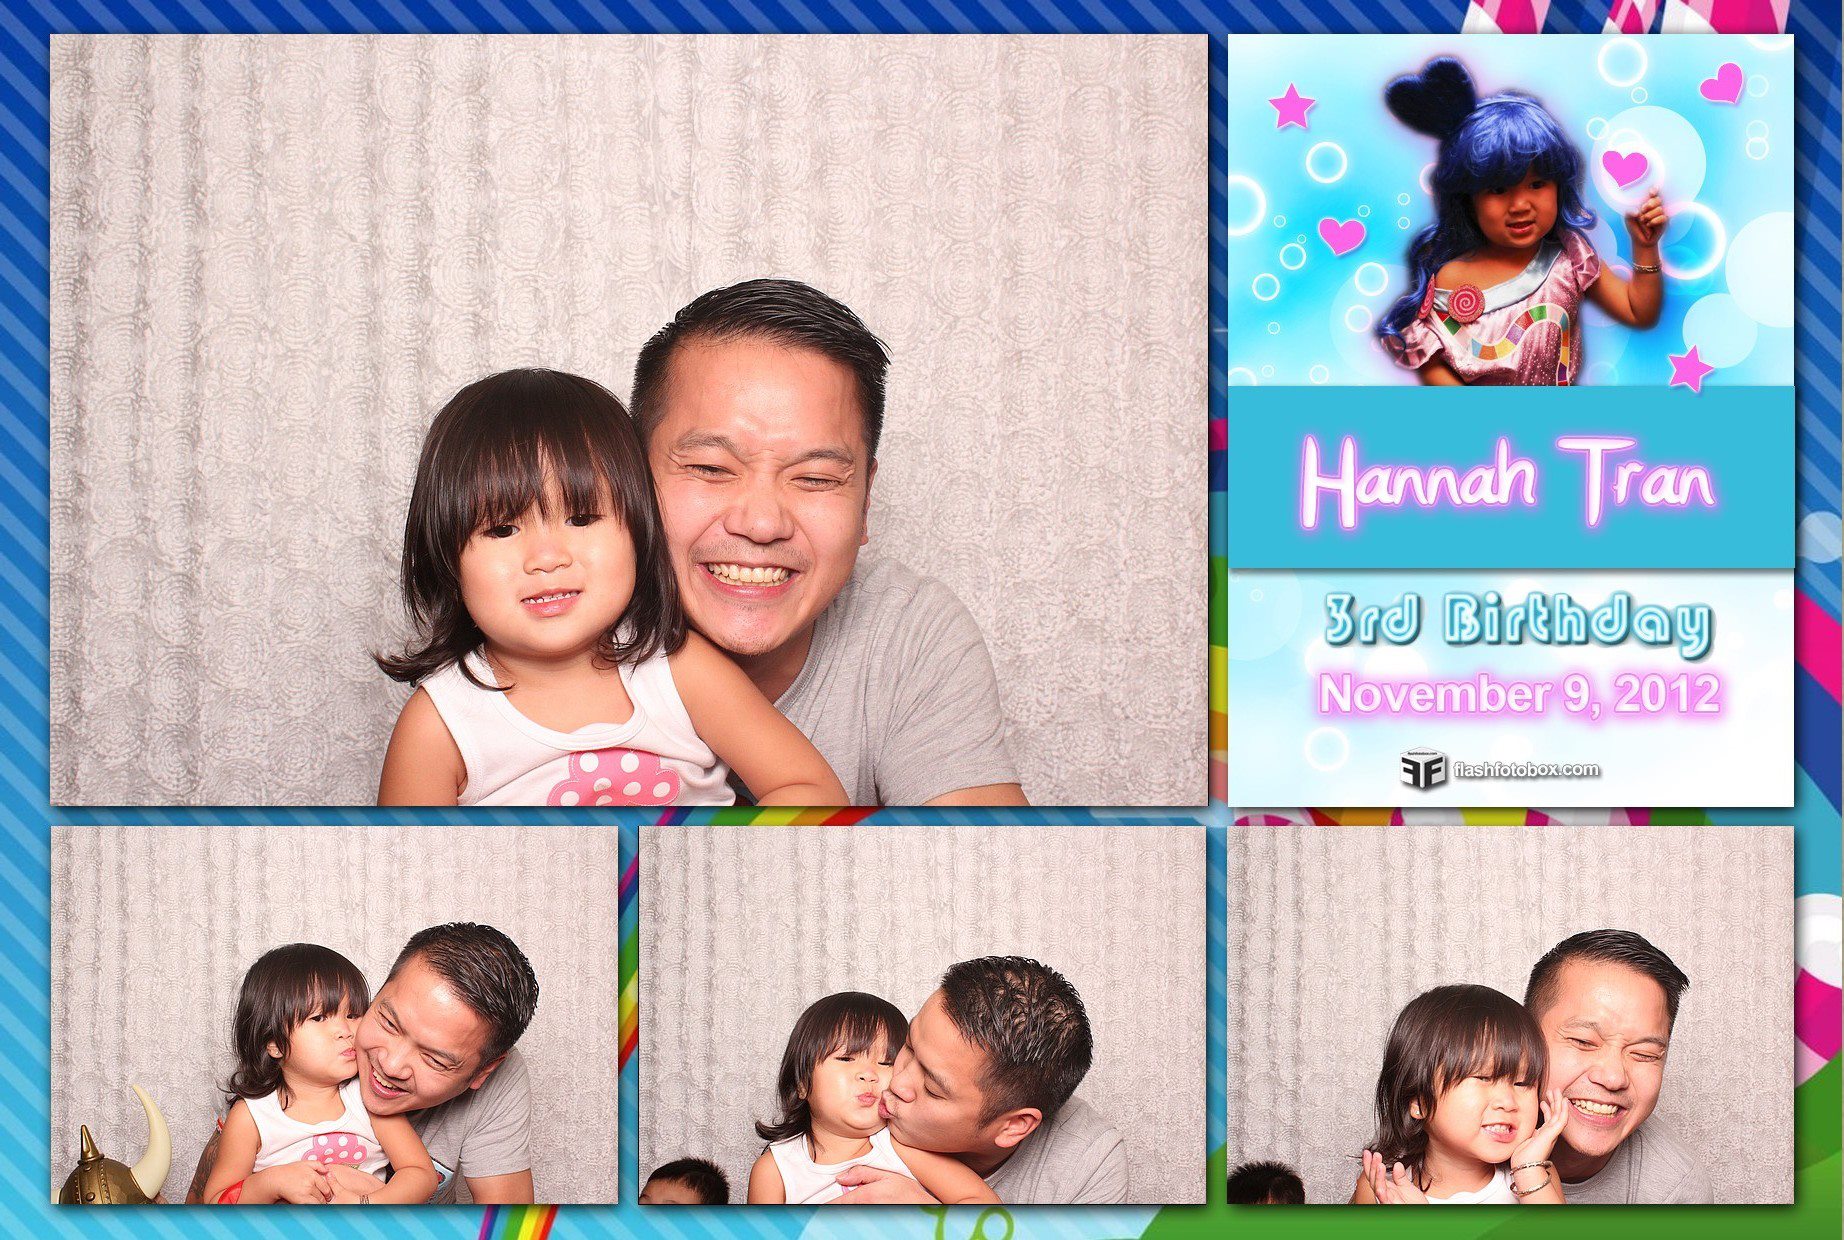 Hannah’s 3rd Birthday Party – November 9, 2012